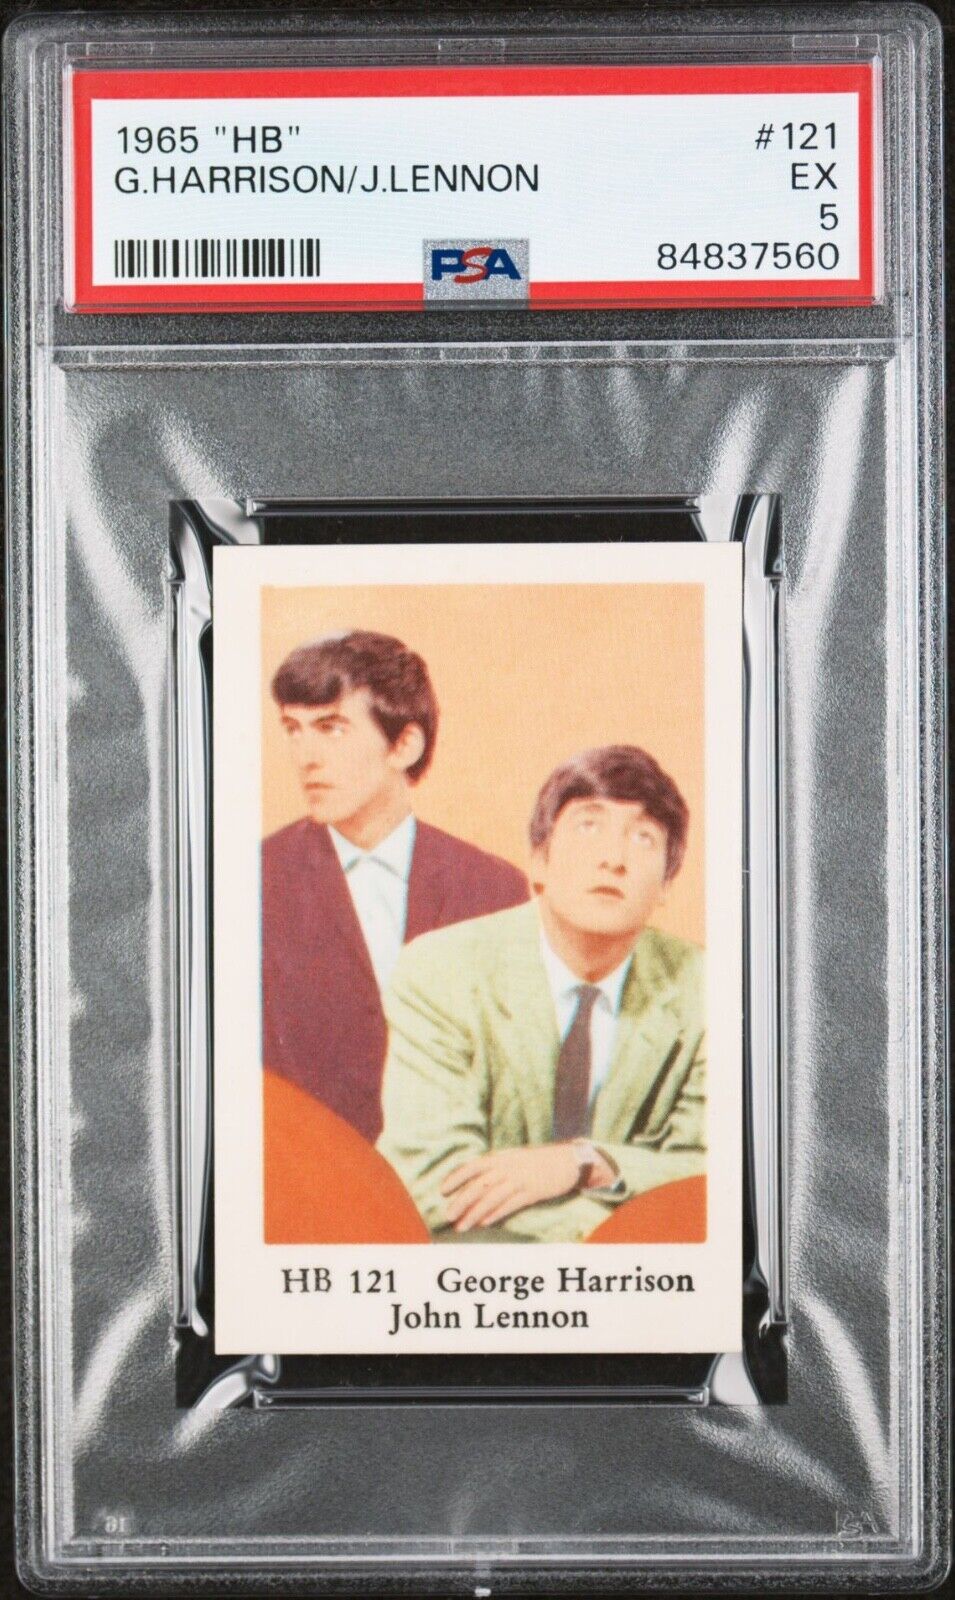 PSA 5 GEORGE HARRISON & JOHN LENNON of The BEATLES 1965 Dutch Gum Card "HB" #121